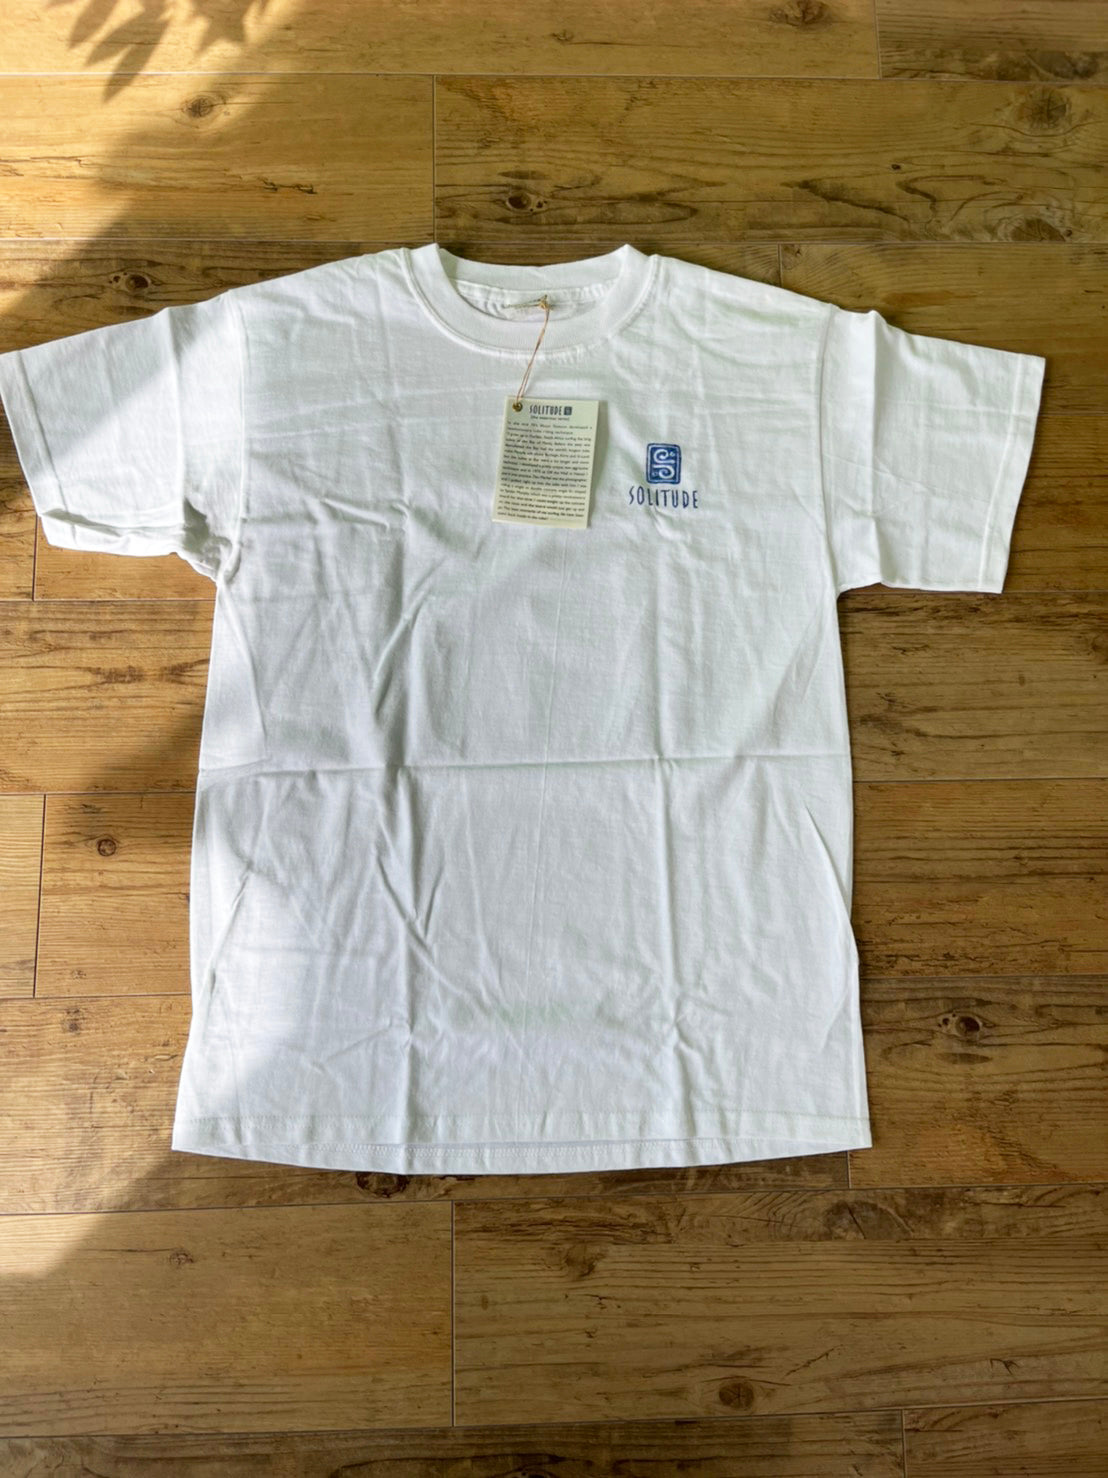 【Solitude】90's vintage surf the waterman series Shaun Tomson T-shirt （men's M)